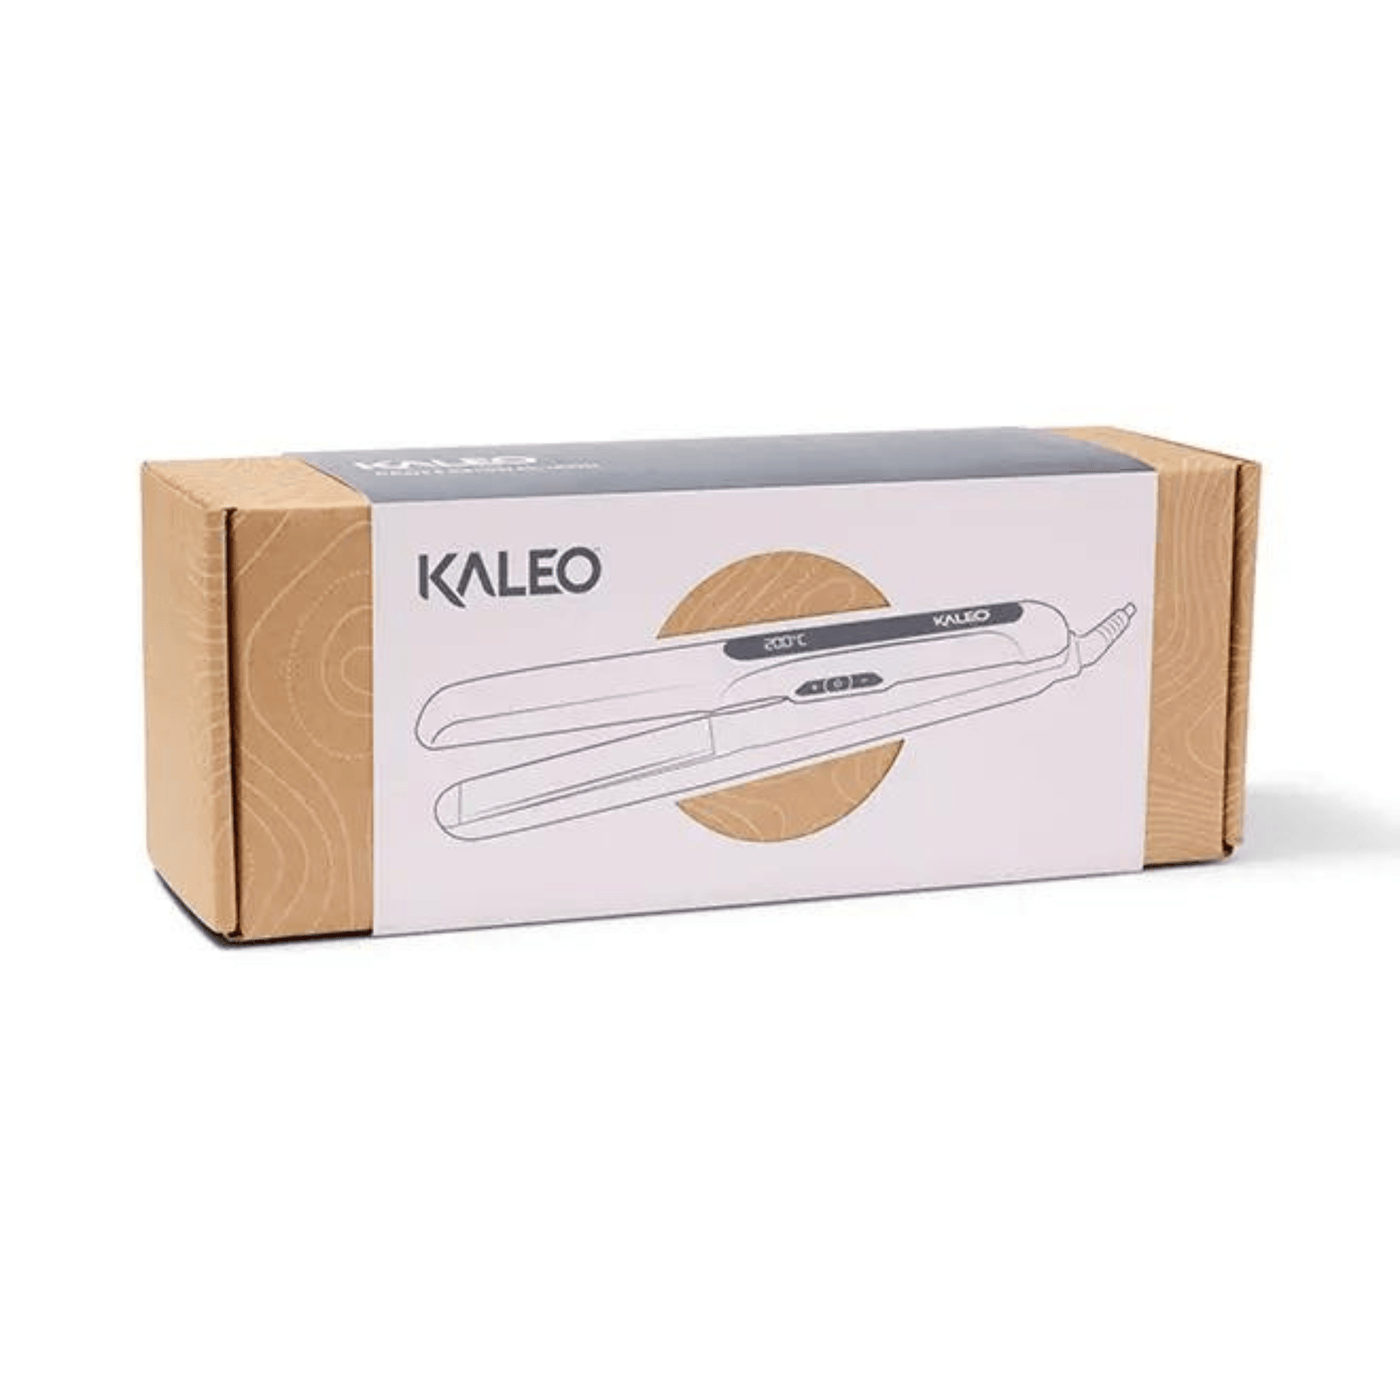 Kaleo Electricals Kaleo Professional Iron Hair Straightener